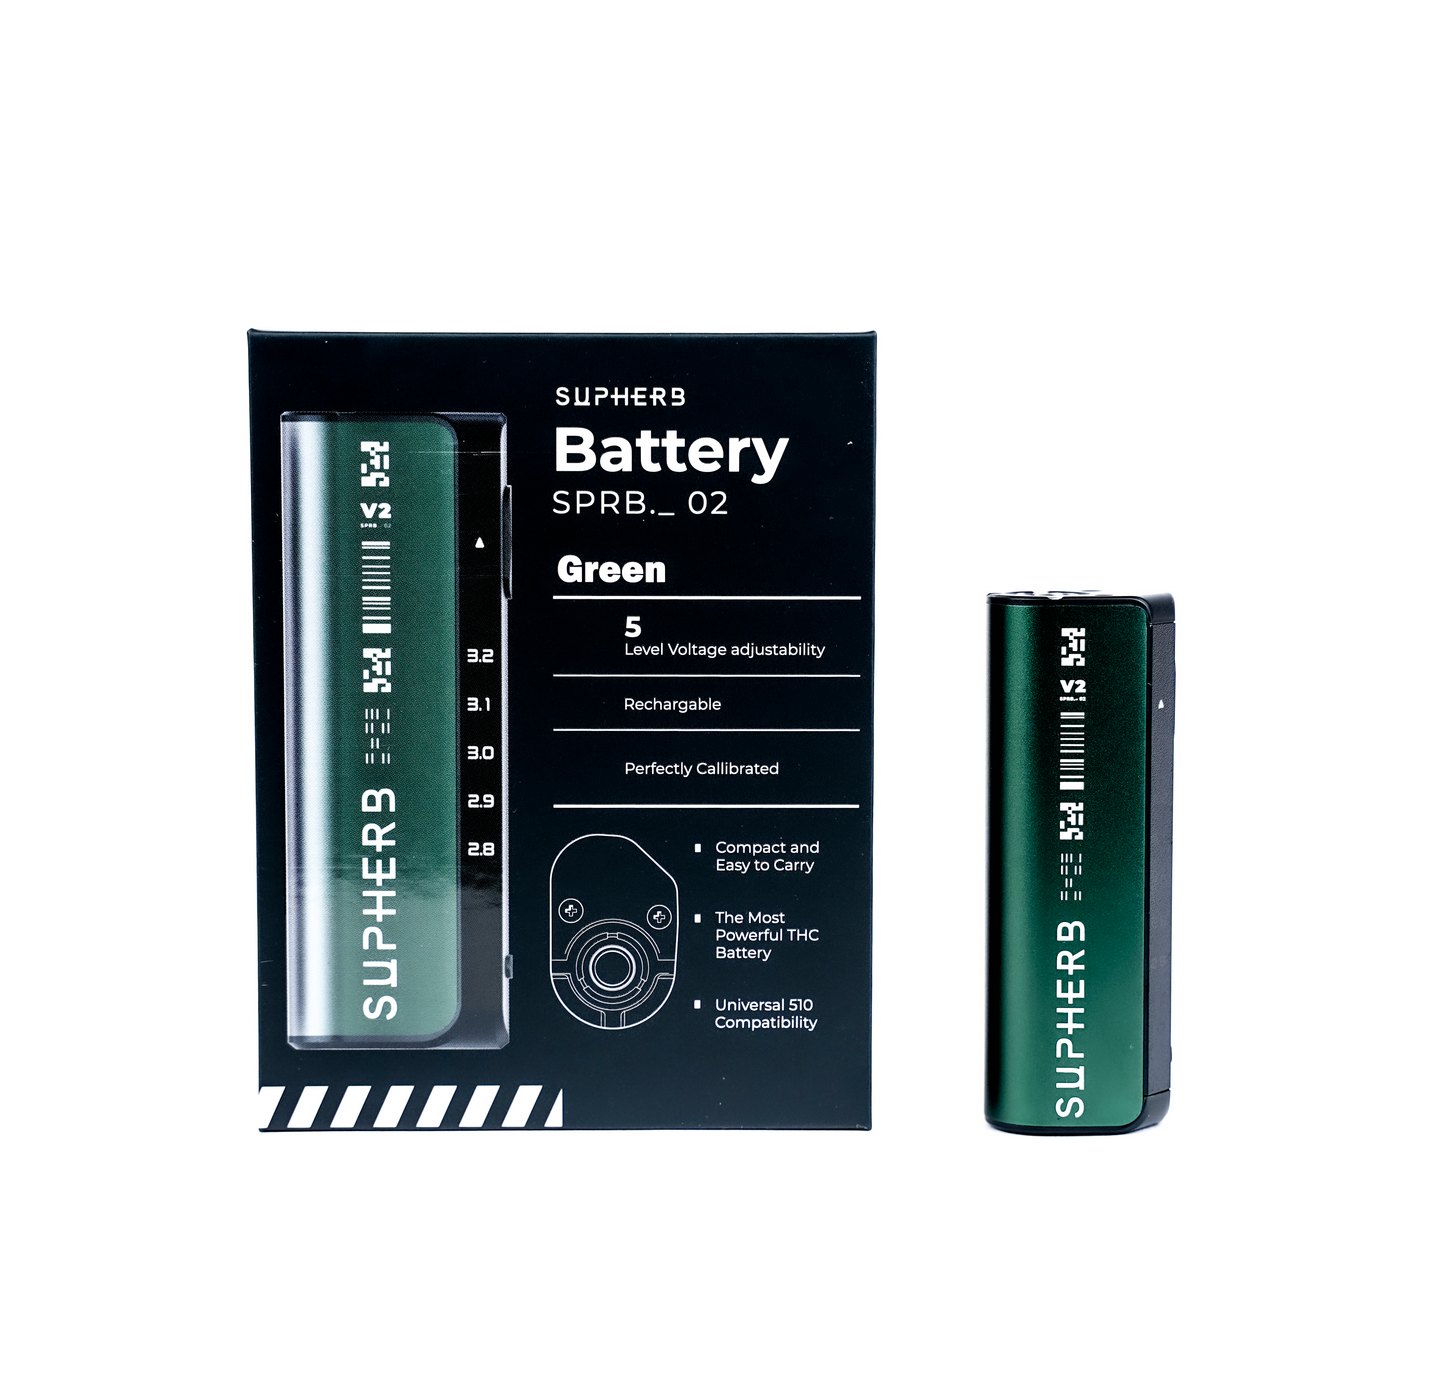 SUPHERB V2 Battery